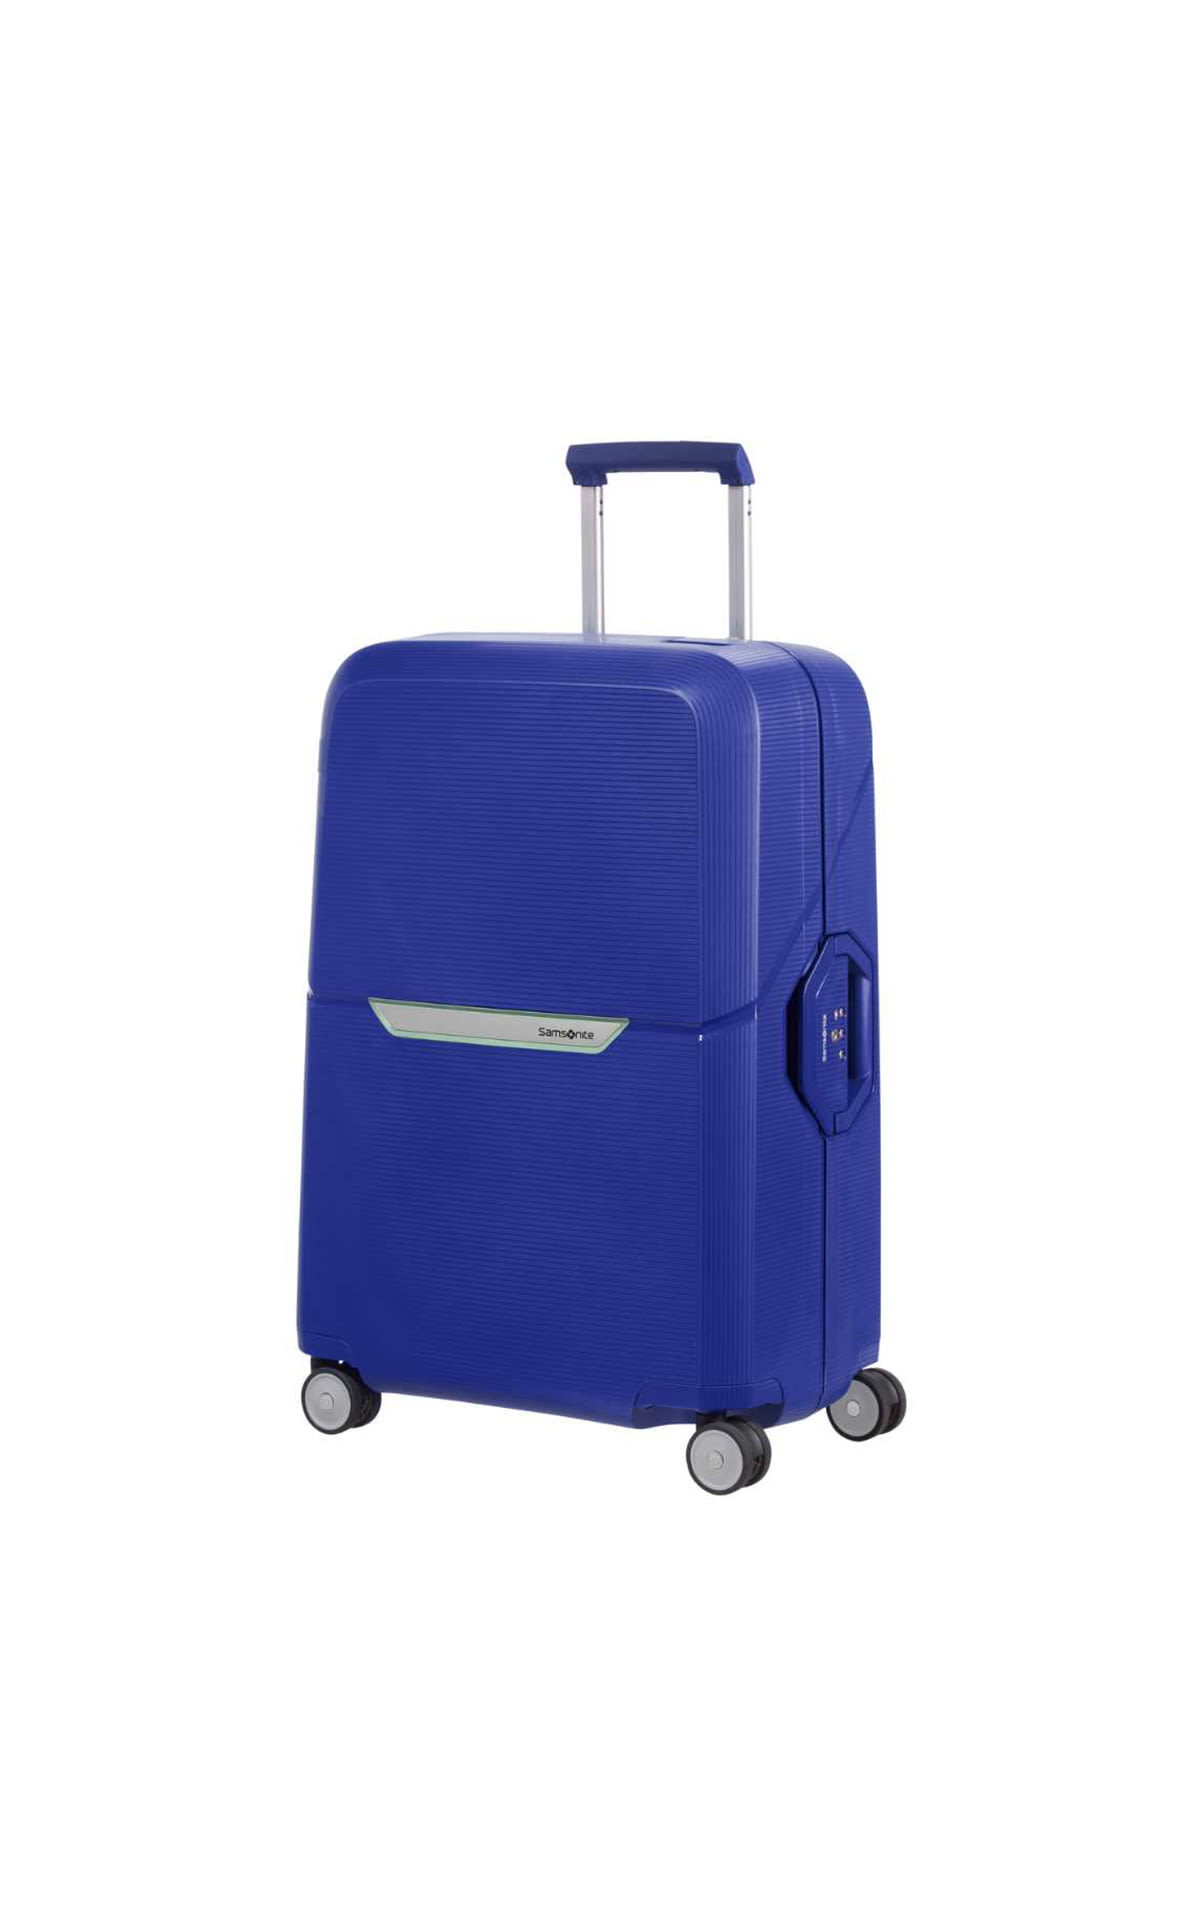 Magnum Spinner blue suitcase